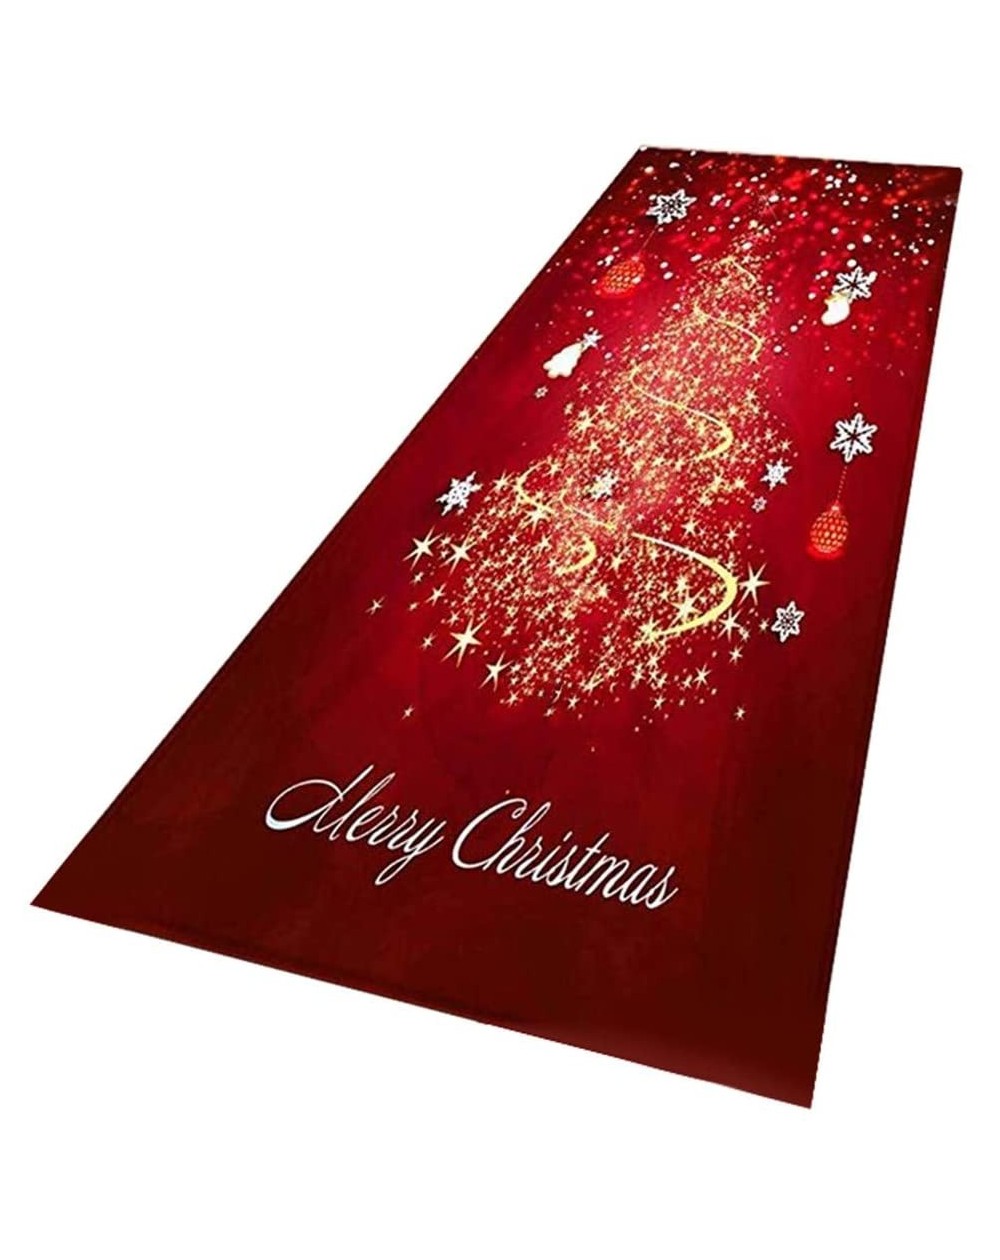 Swags Gift Christmas Carpet Kitchen Doorway Bathroom Floor Carpet Floor Mat Print- Christmas Ornaments Advent Calendar Pillow...